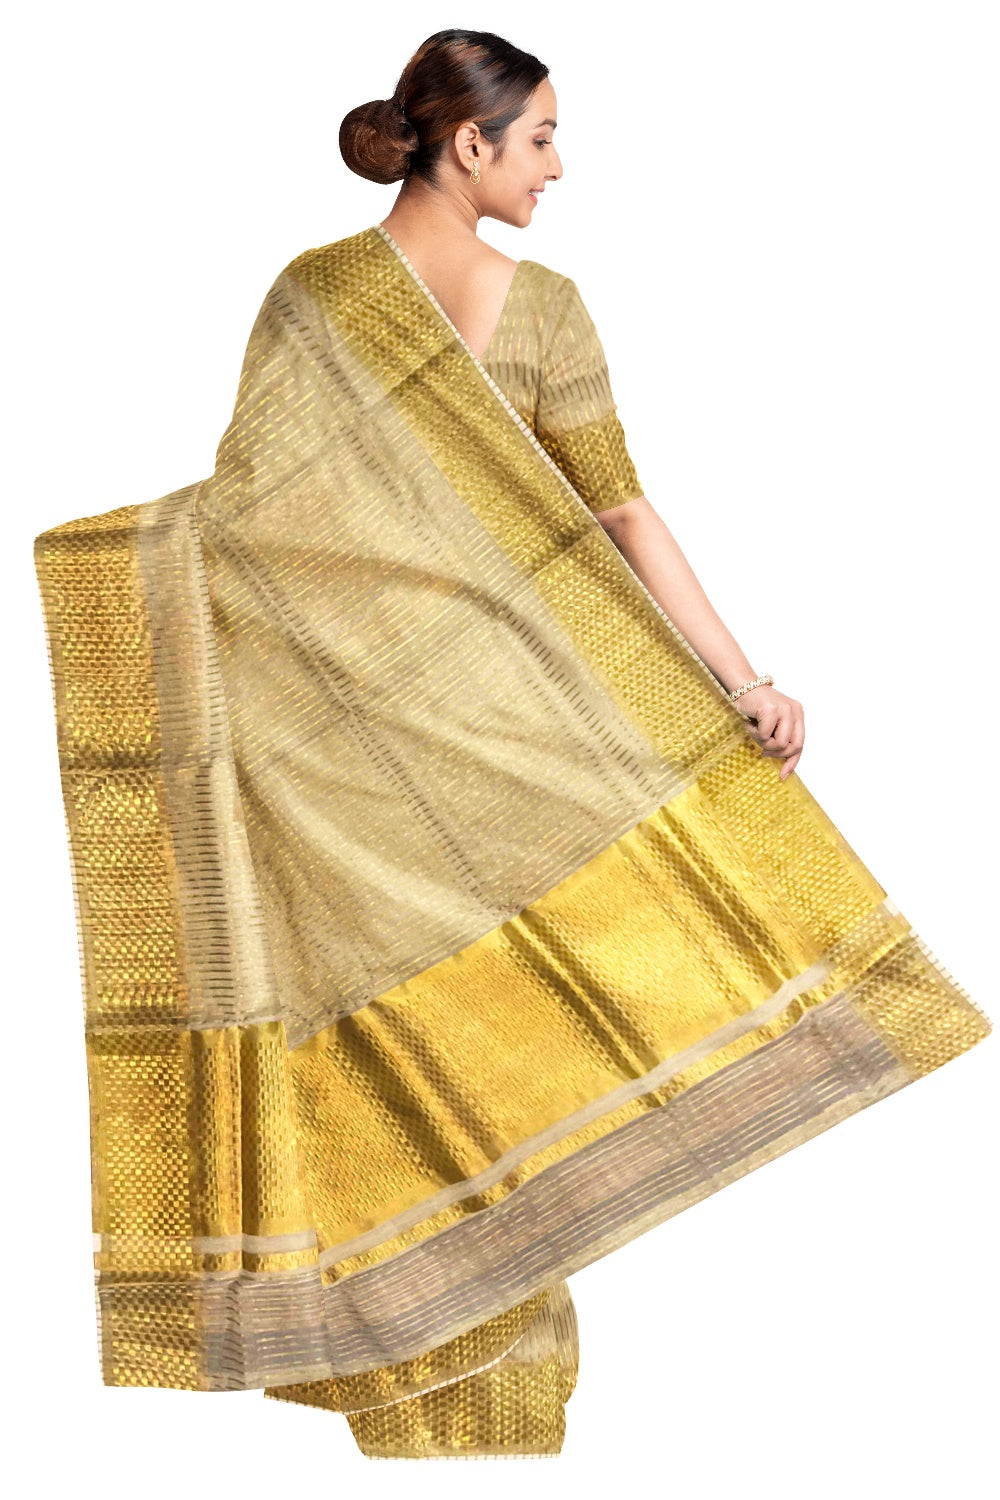 Southloom Kuthampully Handloom Tissue Stripes Saree with 10 inch Paa Neythu Pallu